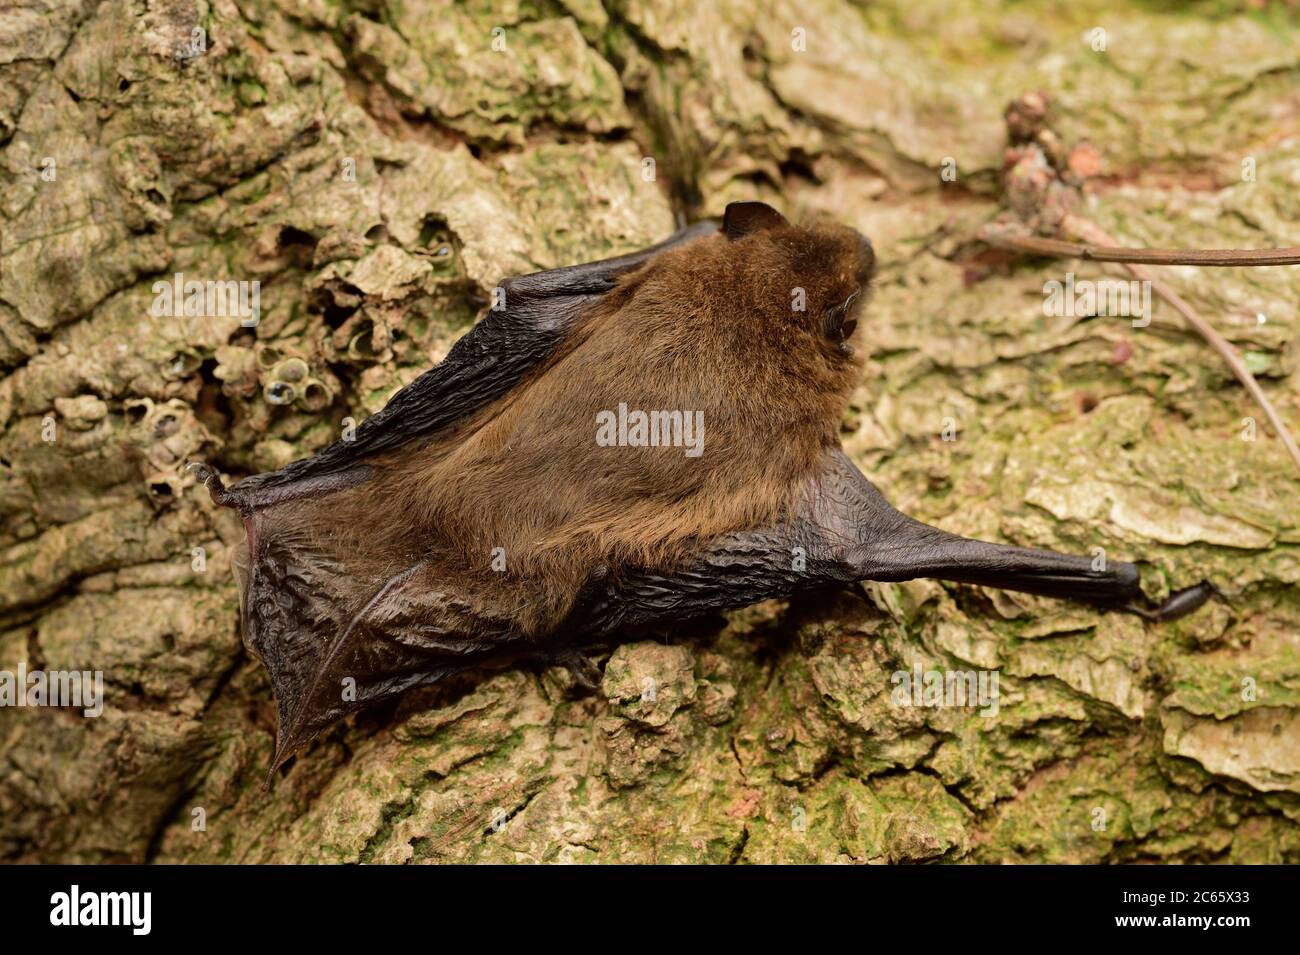 Retrato de cabeza de murciélago de Pipistrellus pipistrellus común, Kiel, Alemania Foto de stock